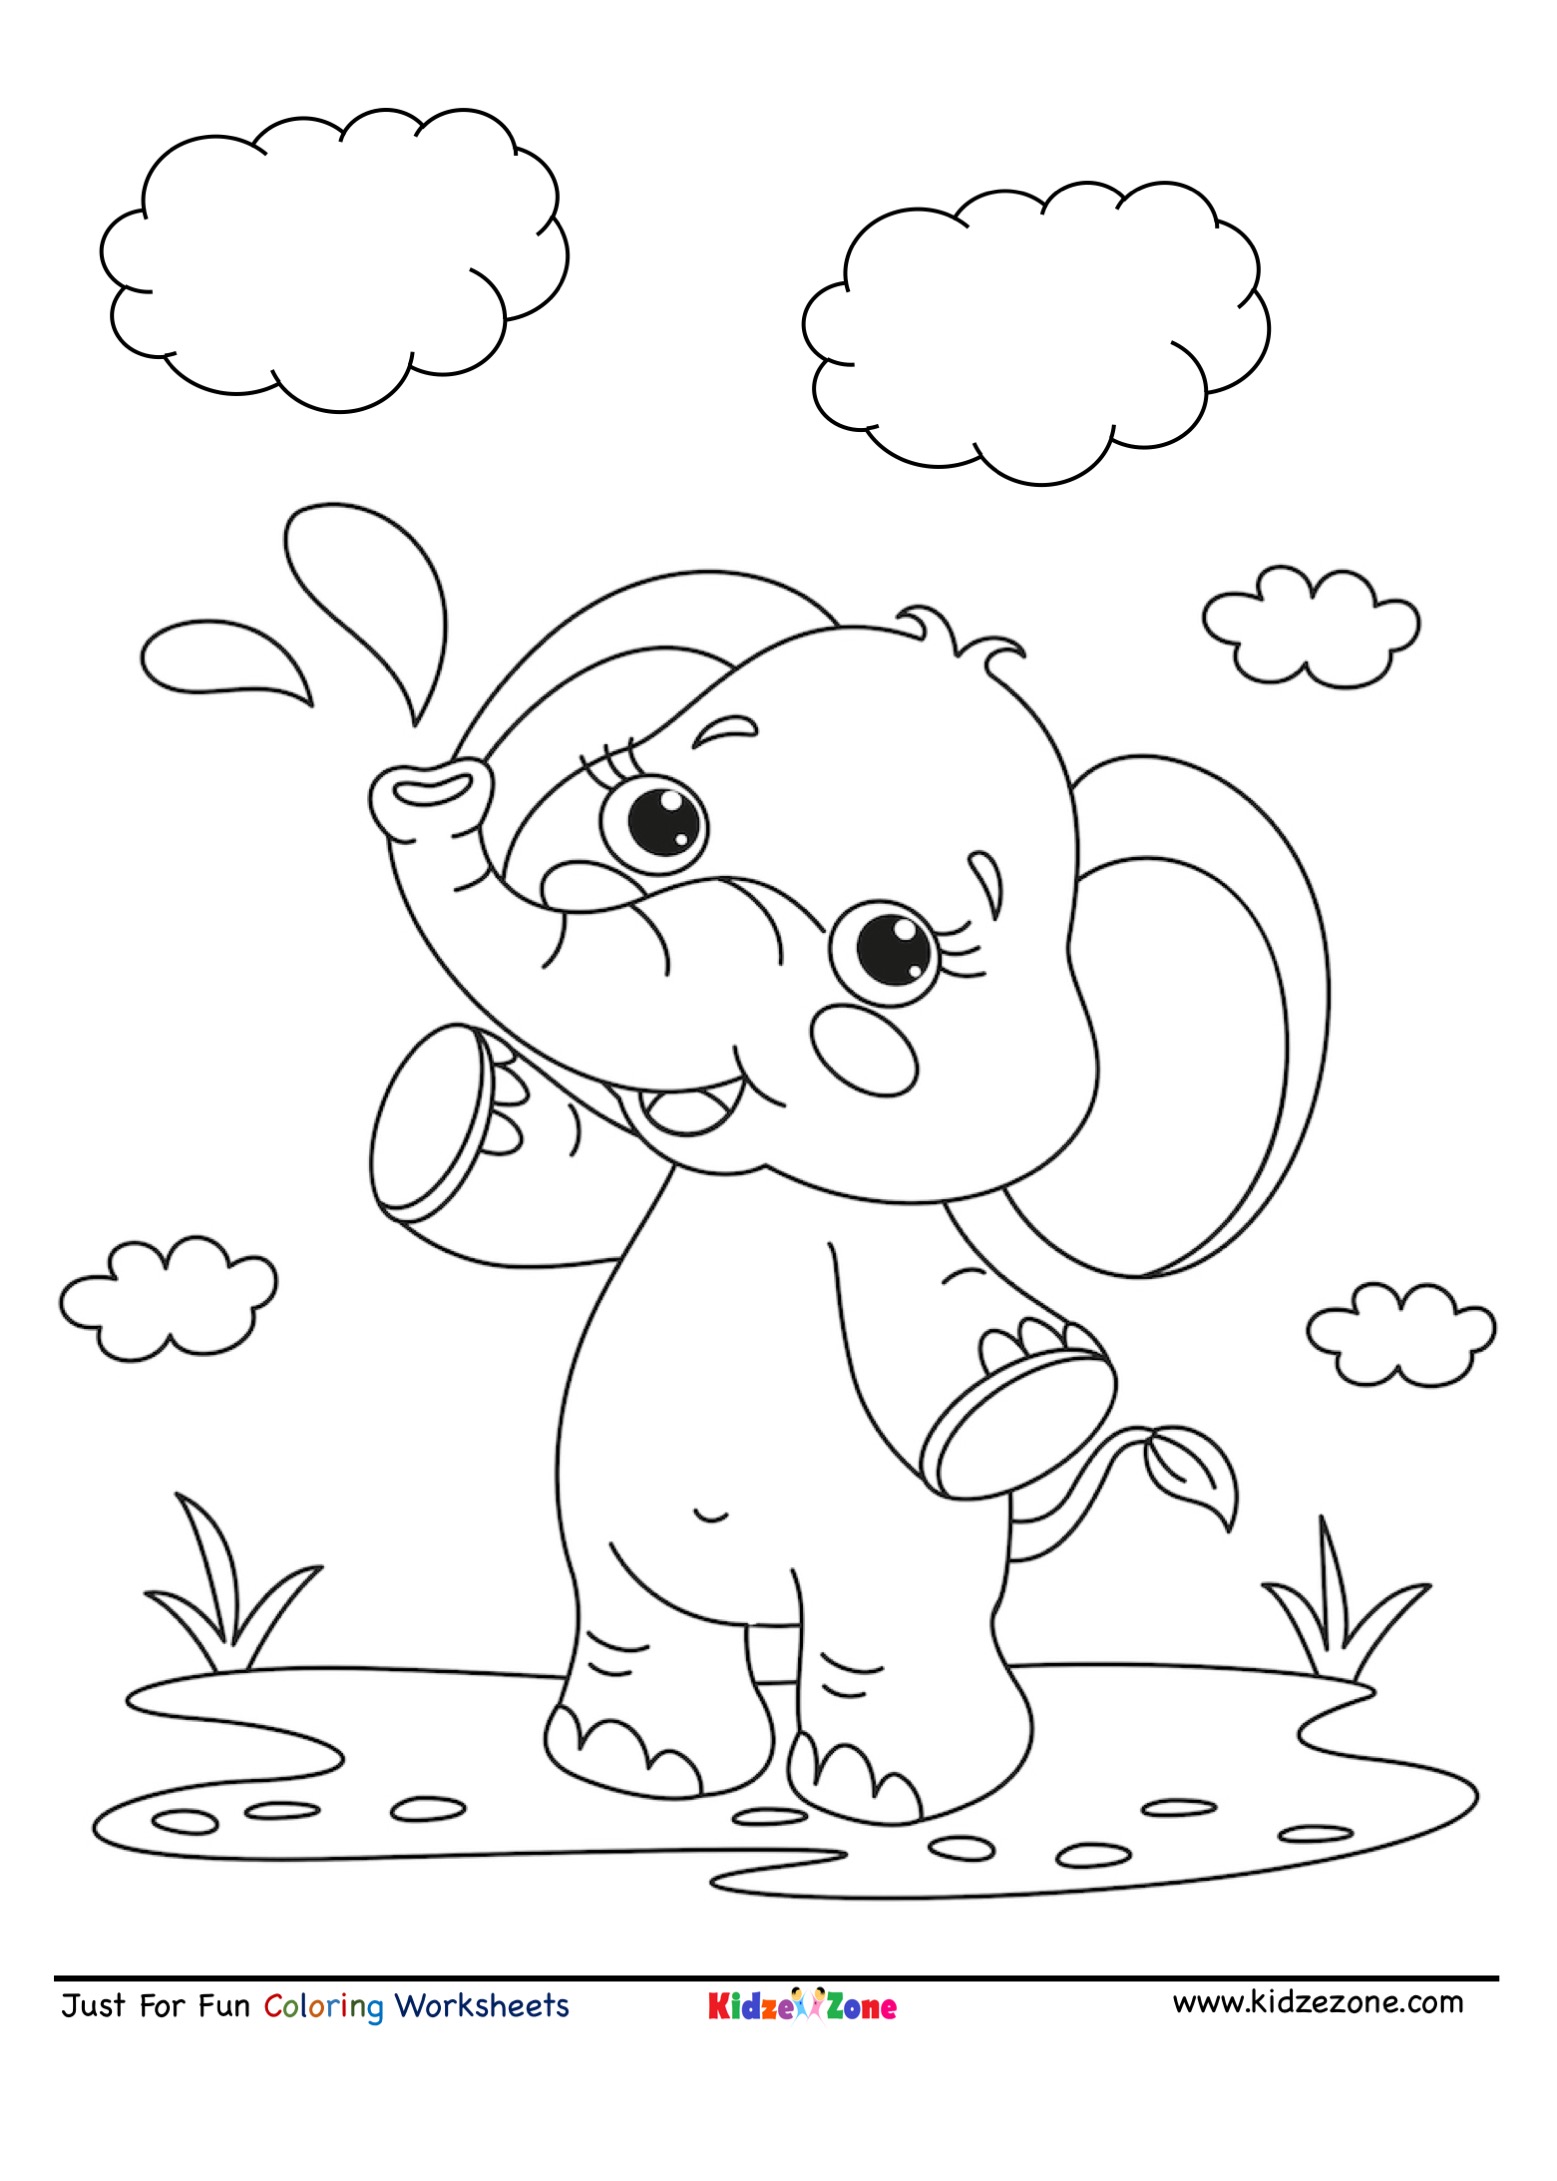 Baby Elephant having fun Coloring Page   KidzeZone